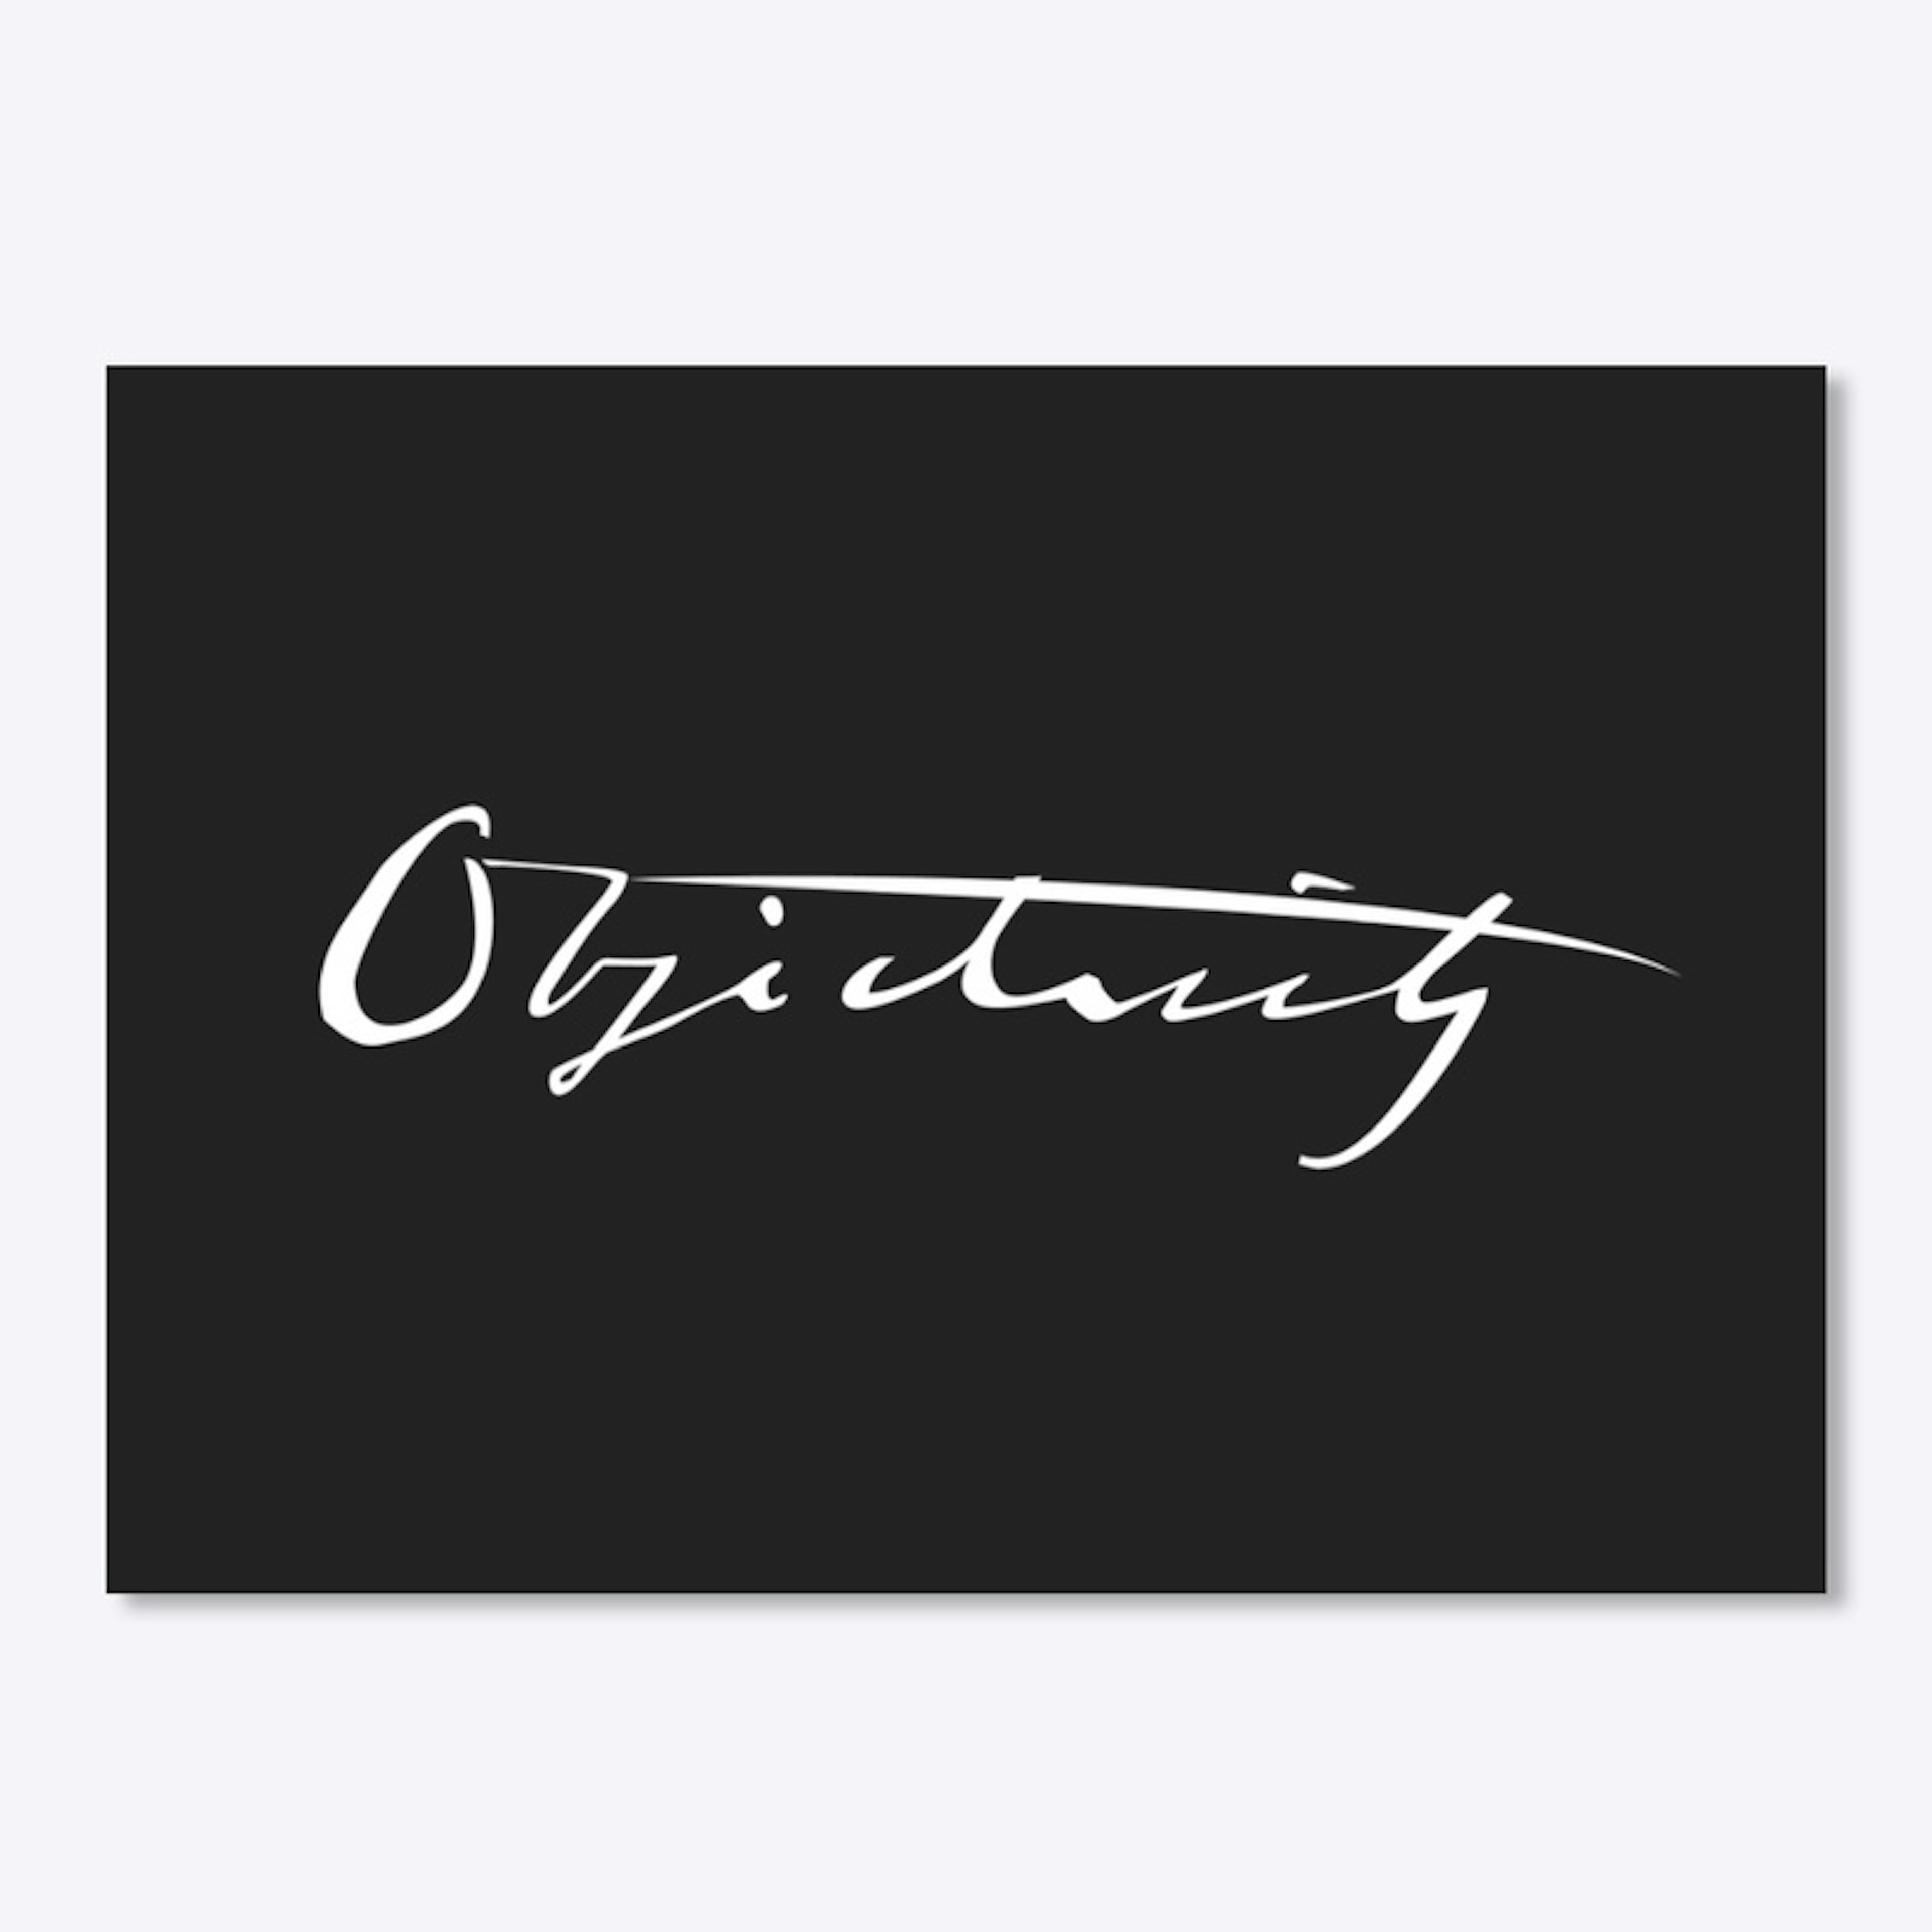 Objectivity - Darwin